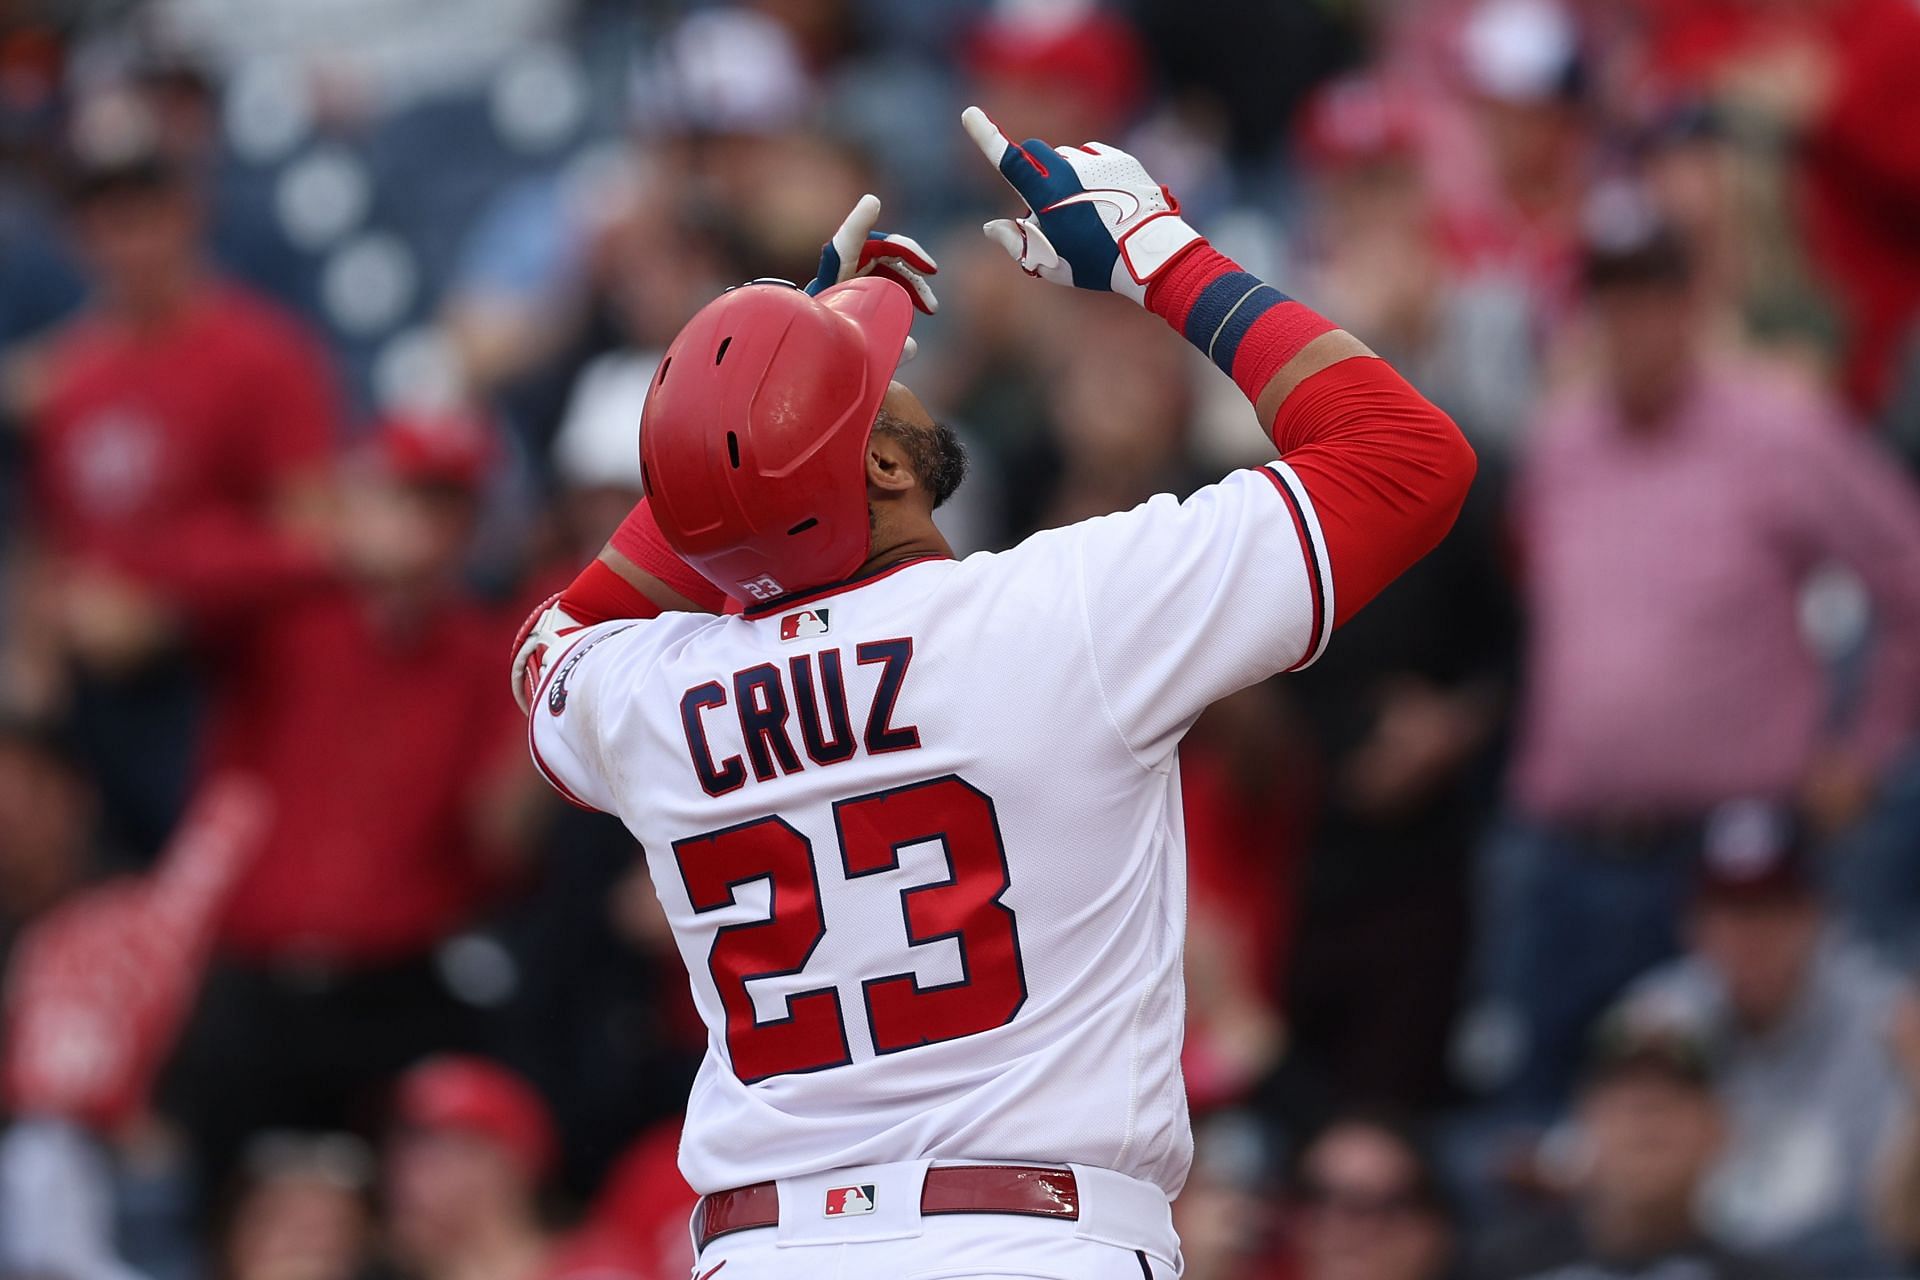 Nelson Cruz of the Washington Nationals celebrates his two run home run.